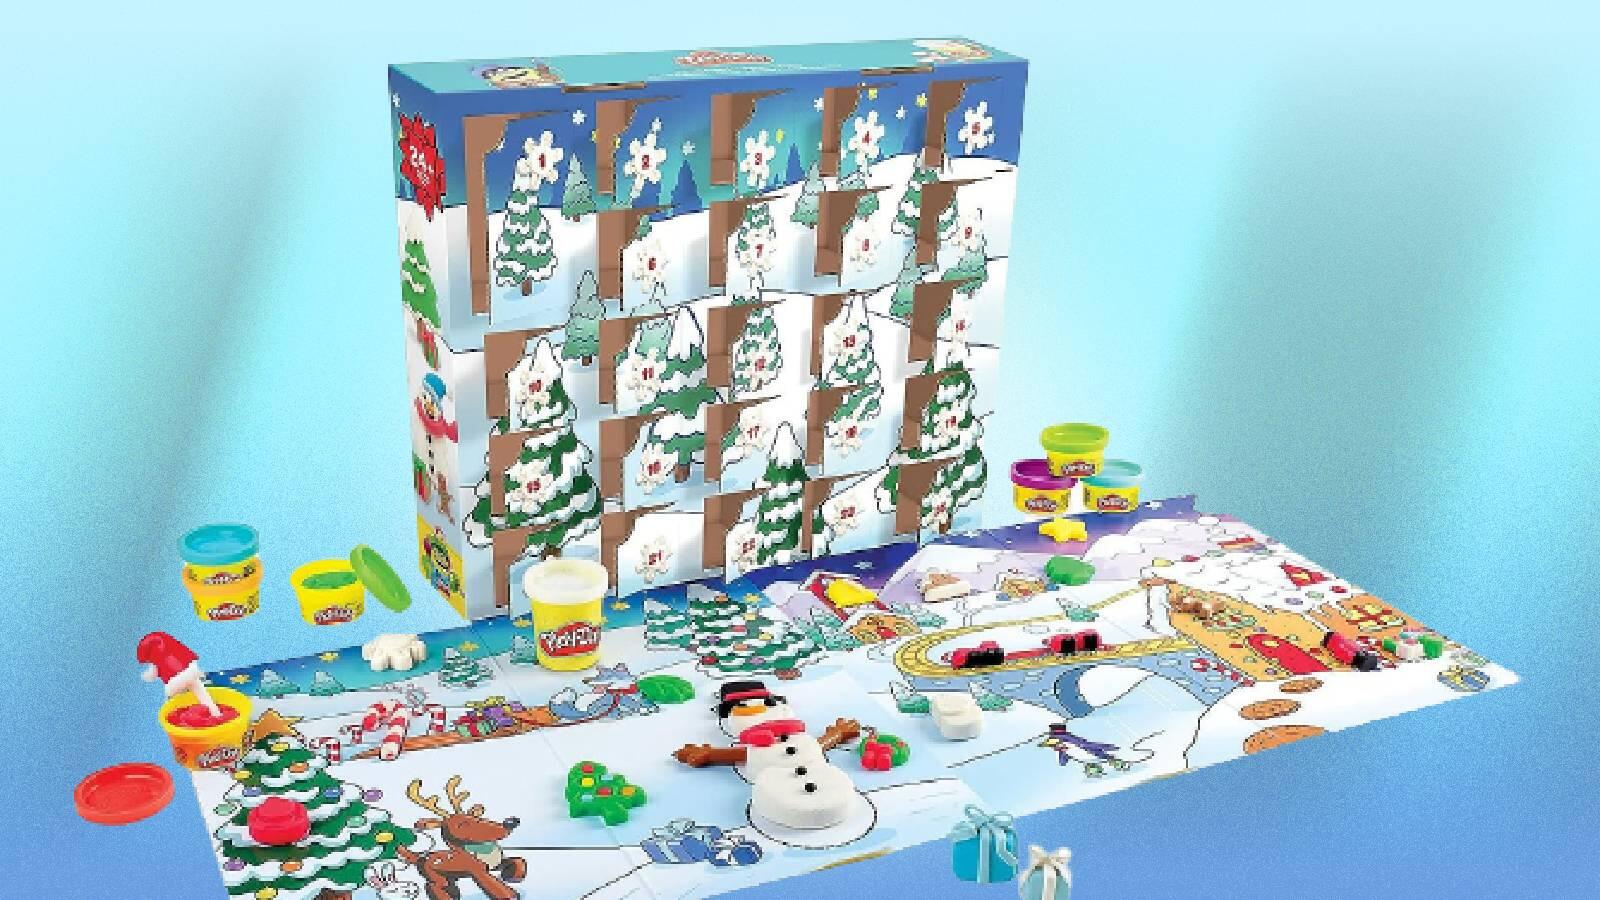 Roblox Rainbow Friends Doors Building Blocks Model Children Christmas Toy  Gifts